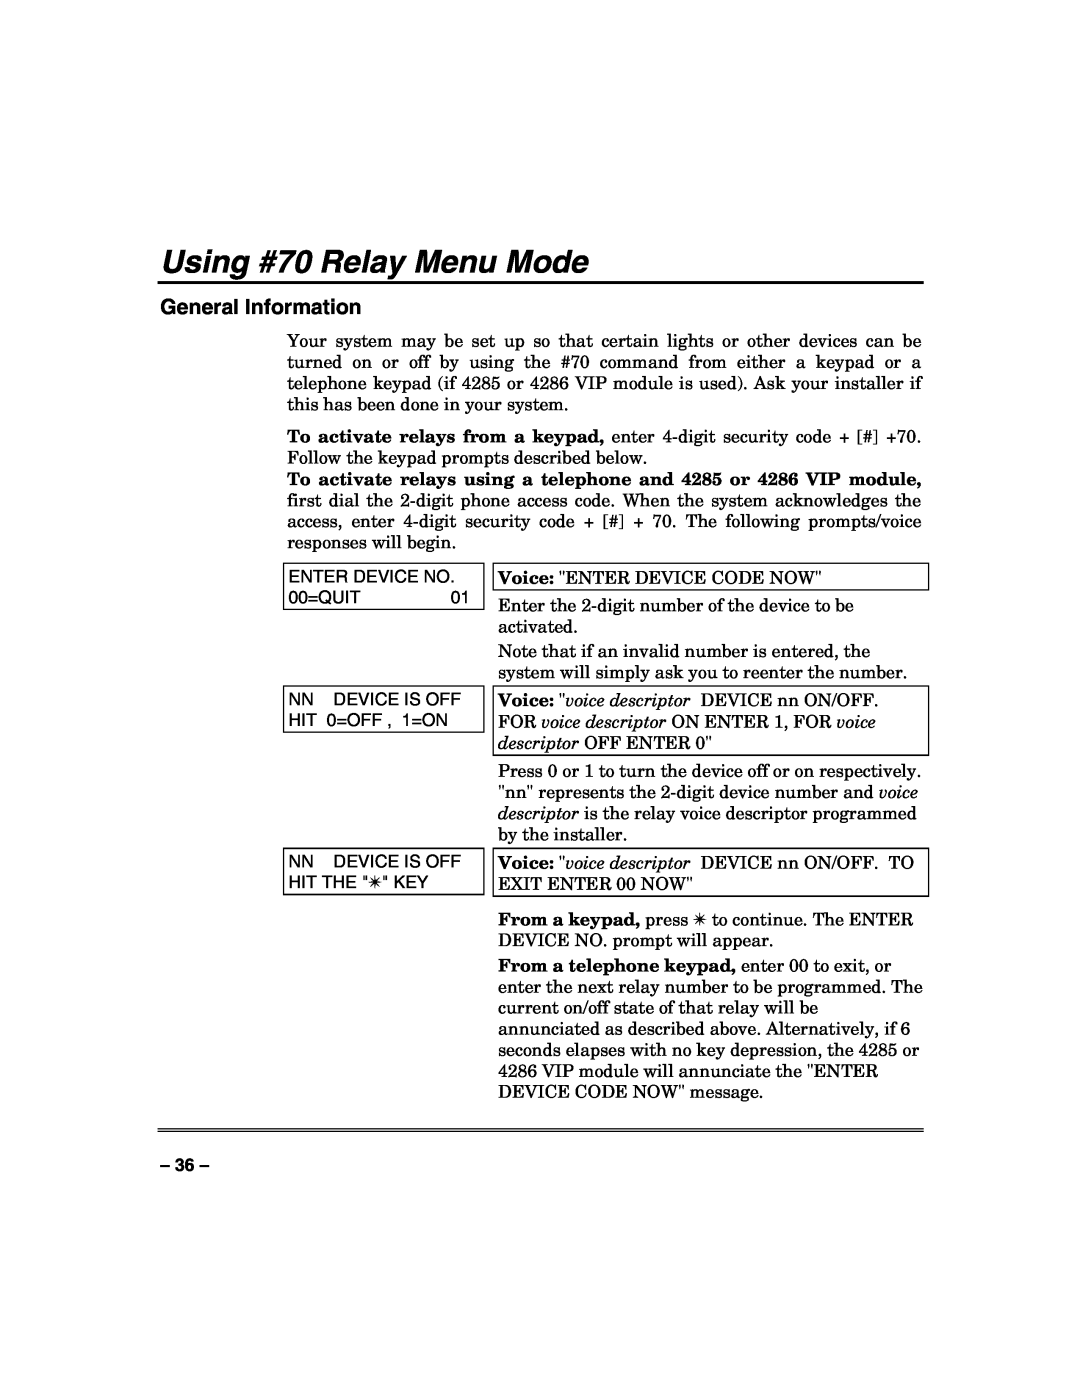 Honeywell N7003V3 manual Using #70 Relay Menu Mode, General Information 